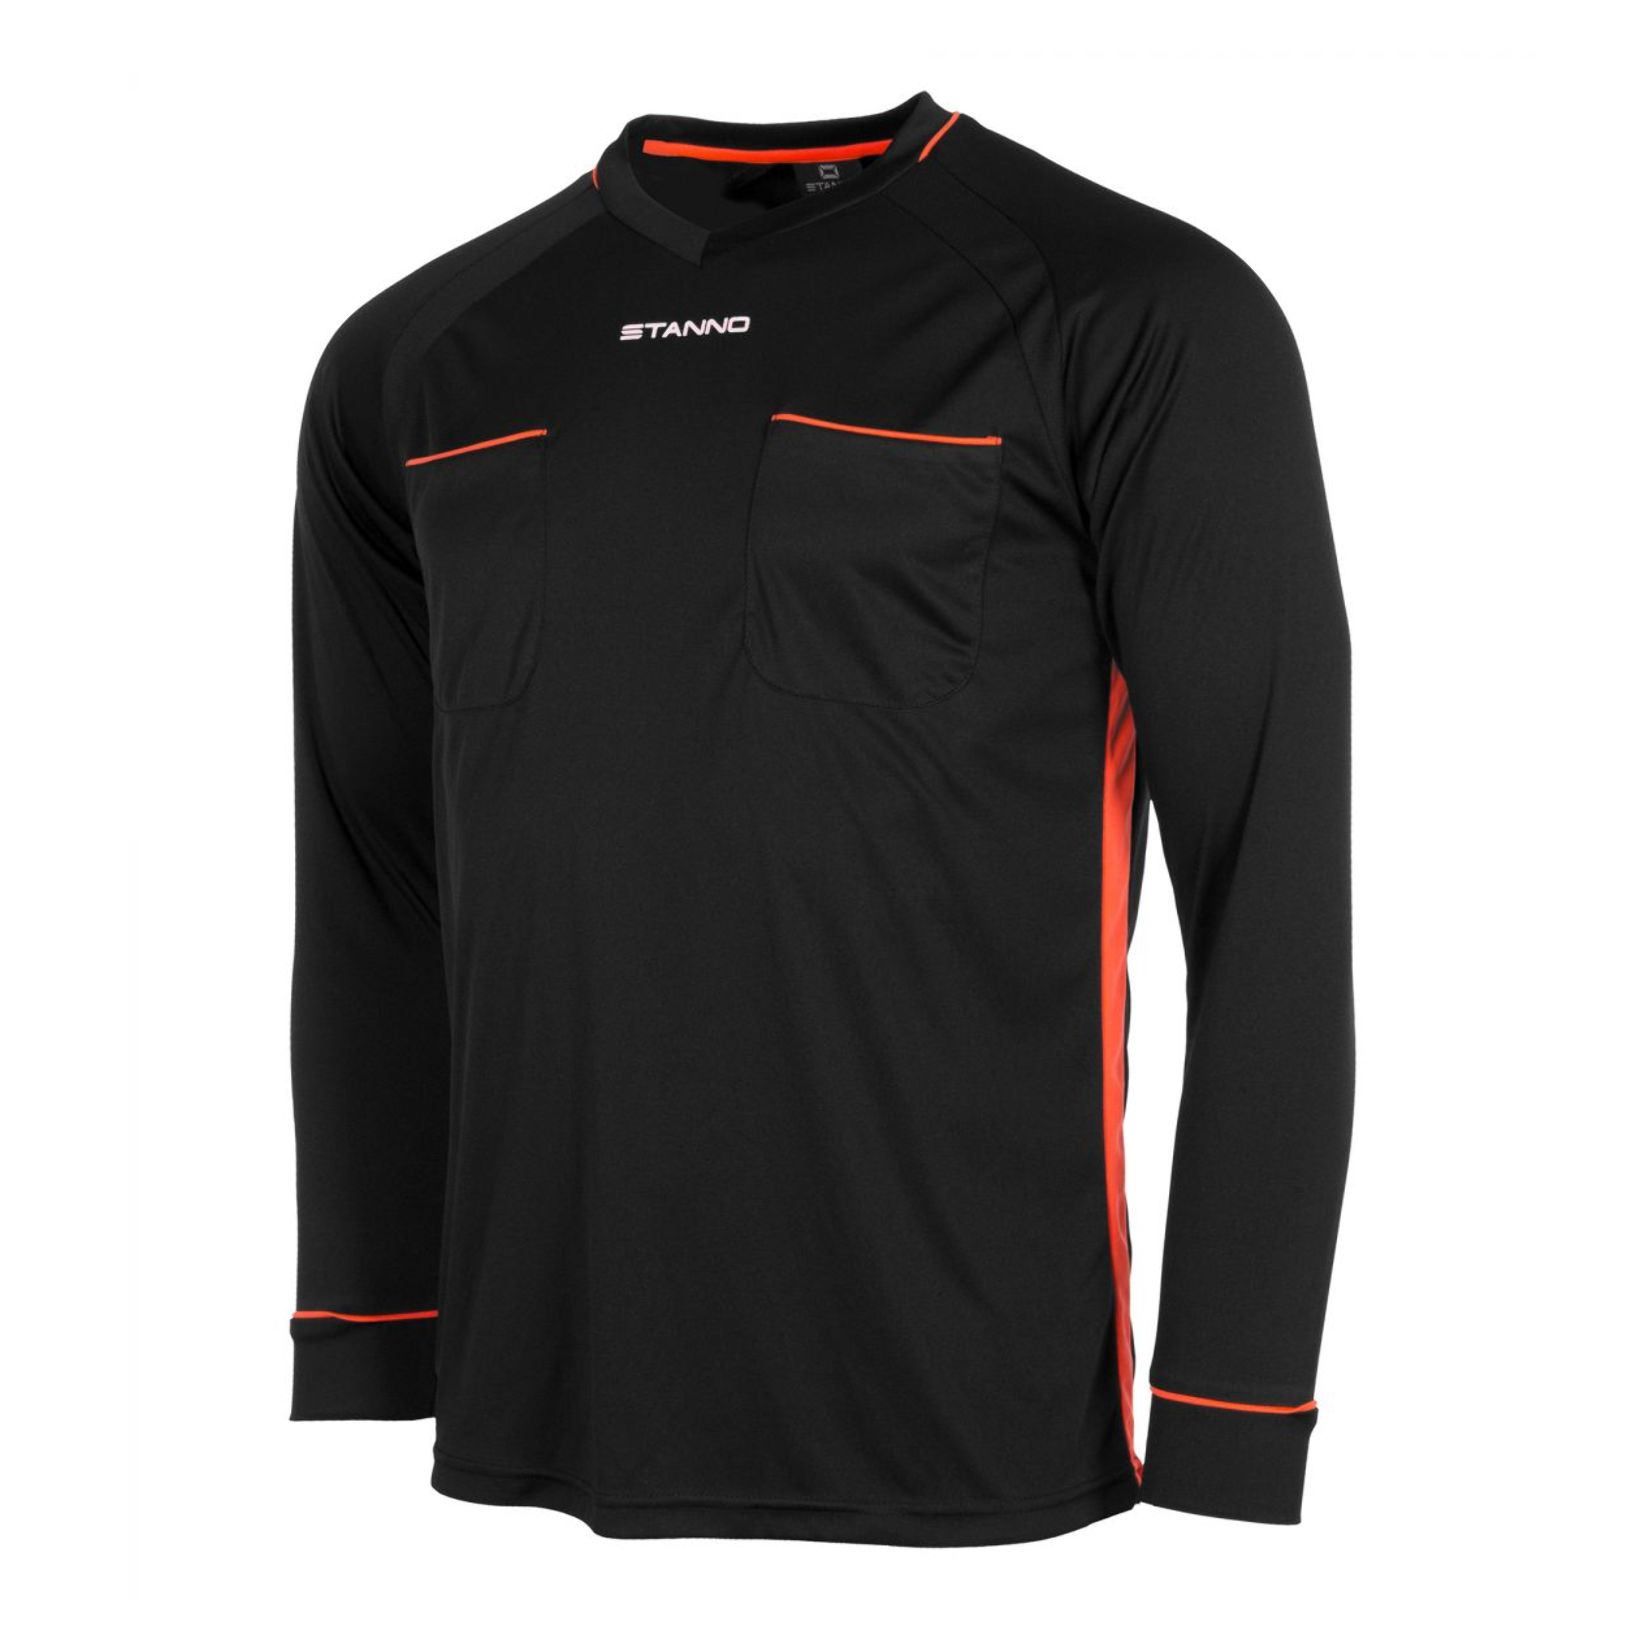 Stanno Ancona Long Sleeve Referee Shirt - Kitlocker.com